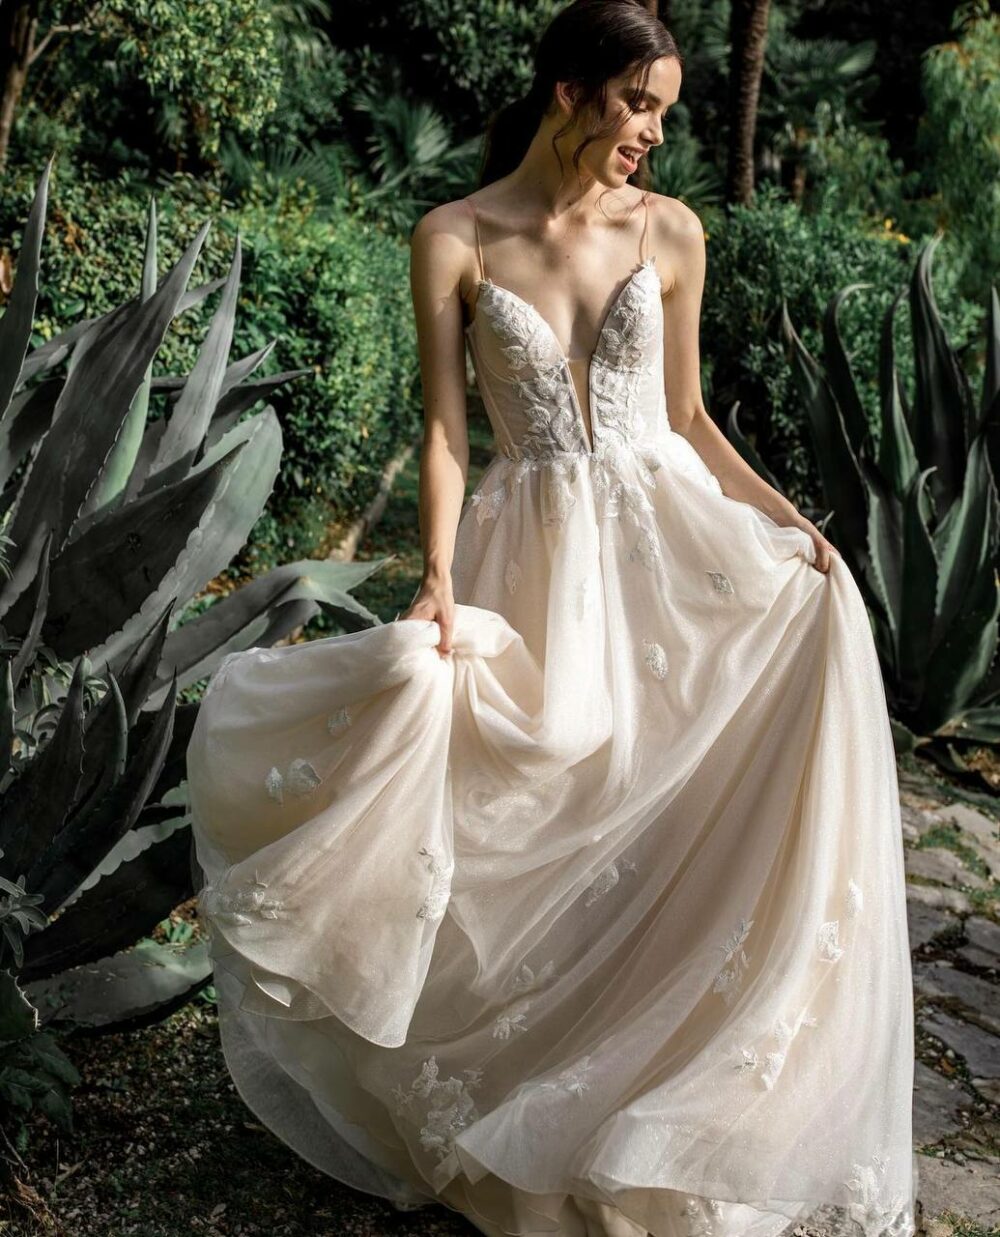 Brautkleid von Ari Vilosso - Laura